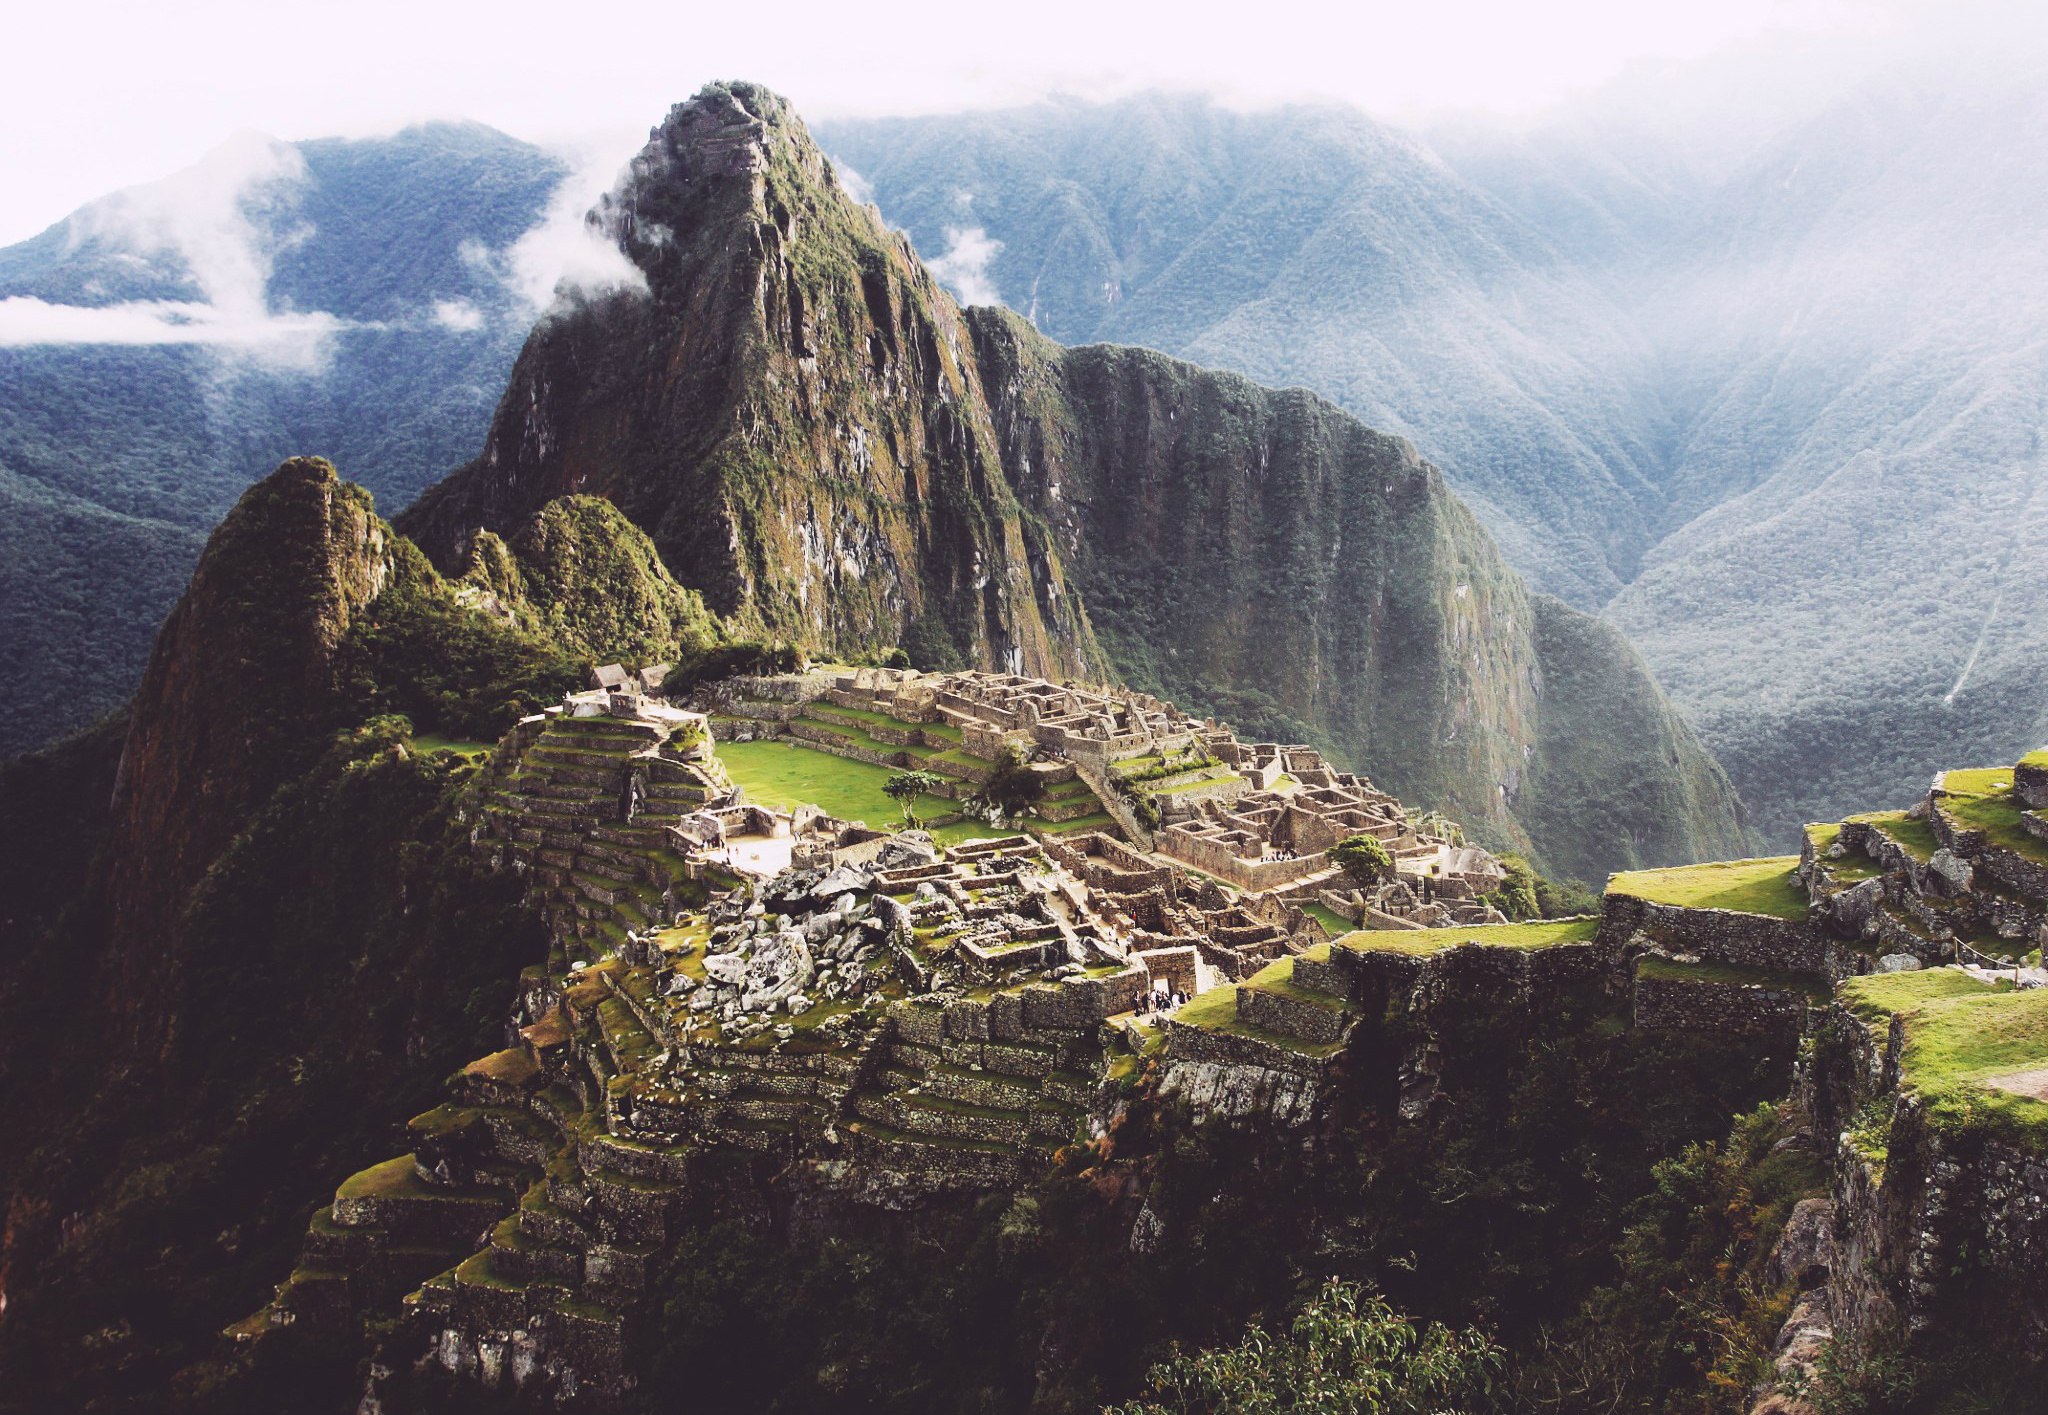 General 2048x1415 nature landscape mountains ancient South America Machu Picchu Peru Inca World Heritage Site landmark